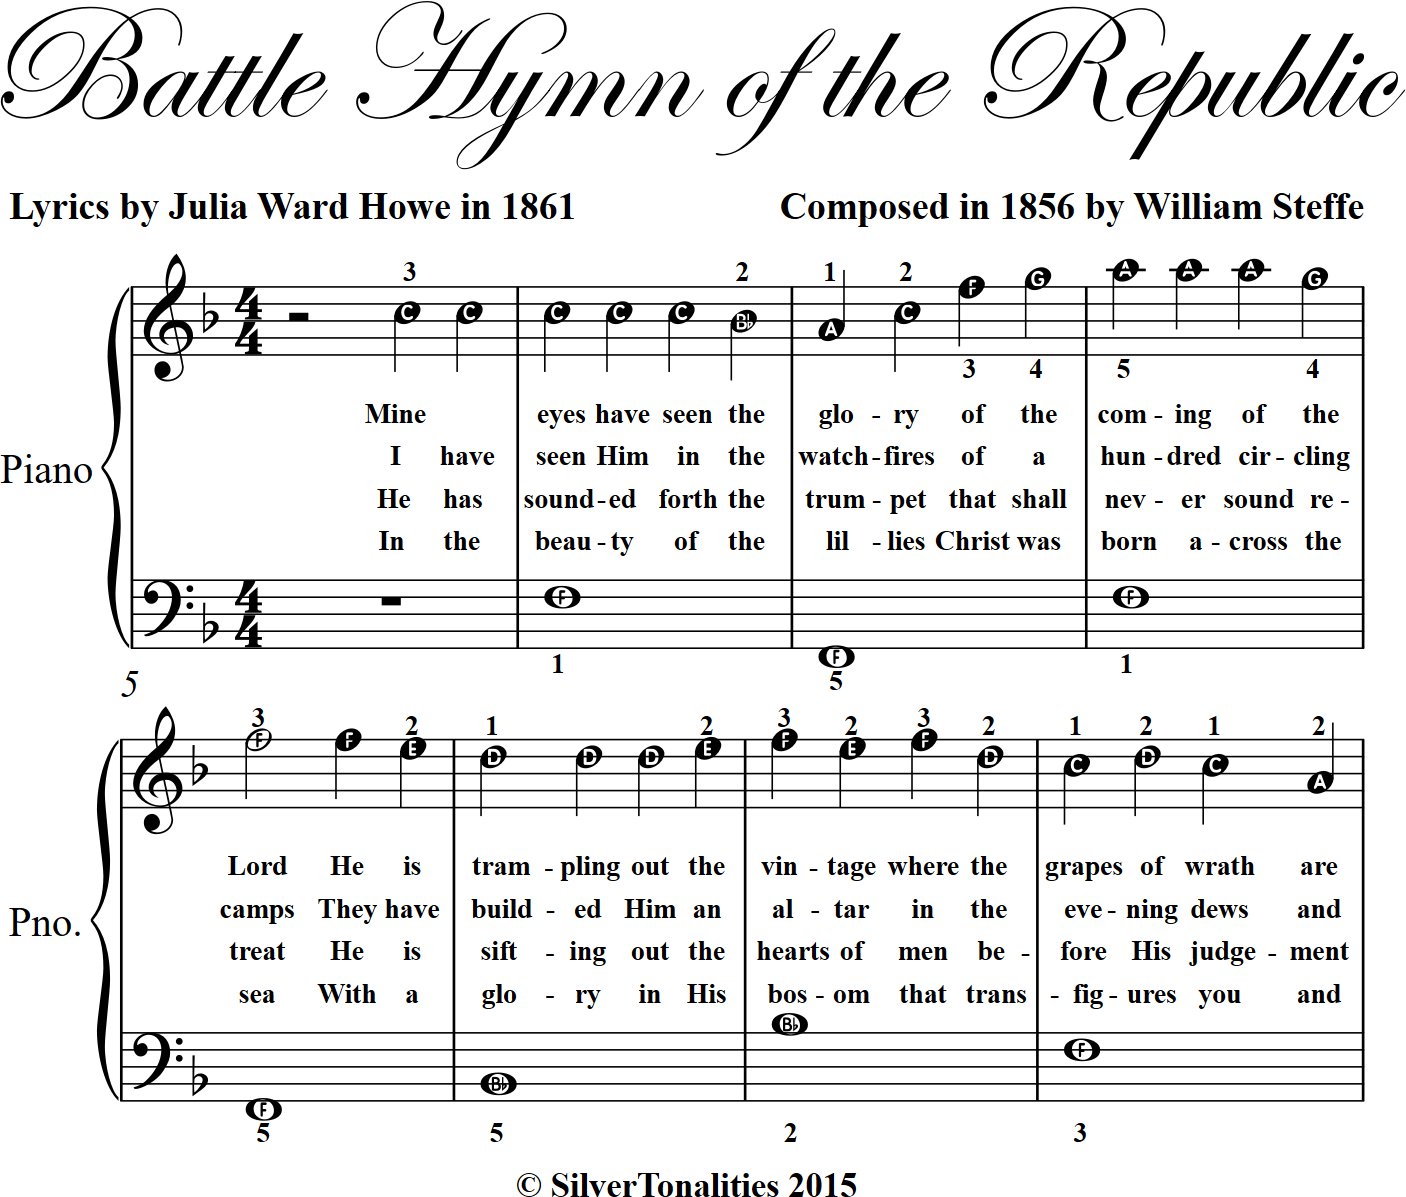 Battle Hymn of the Republic Easiest Piano Sheet Music